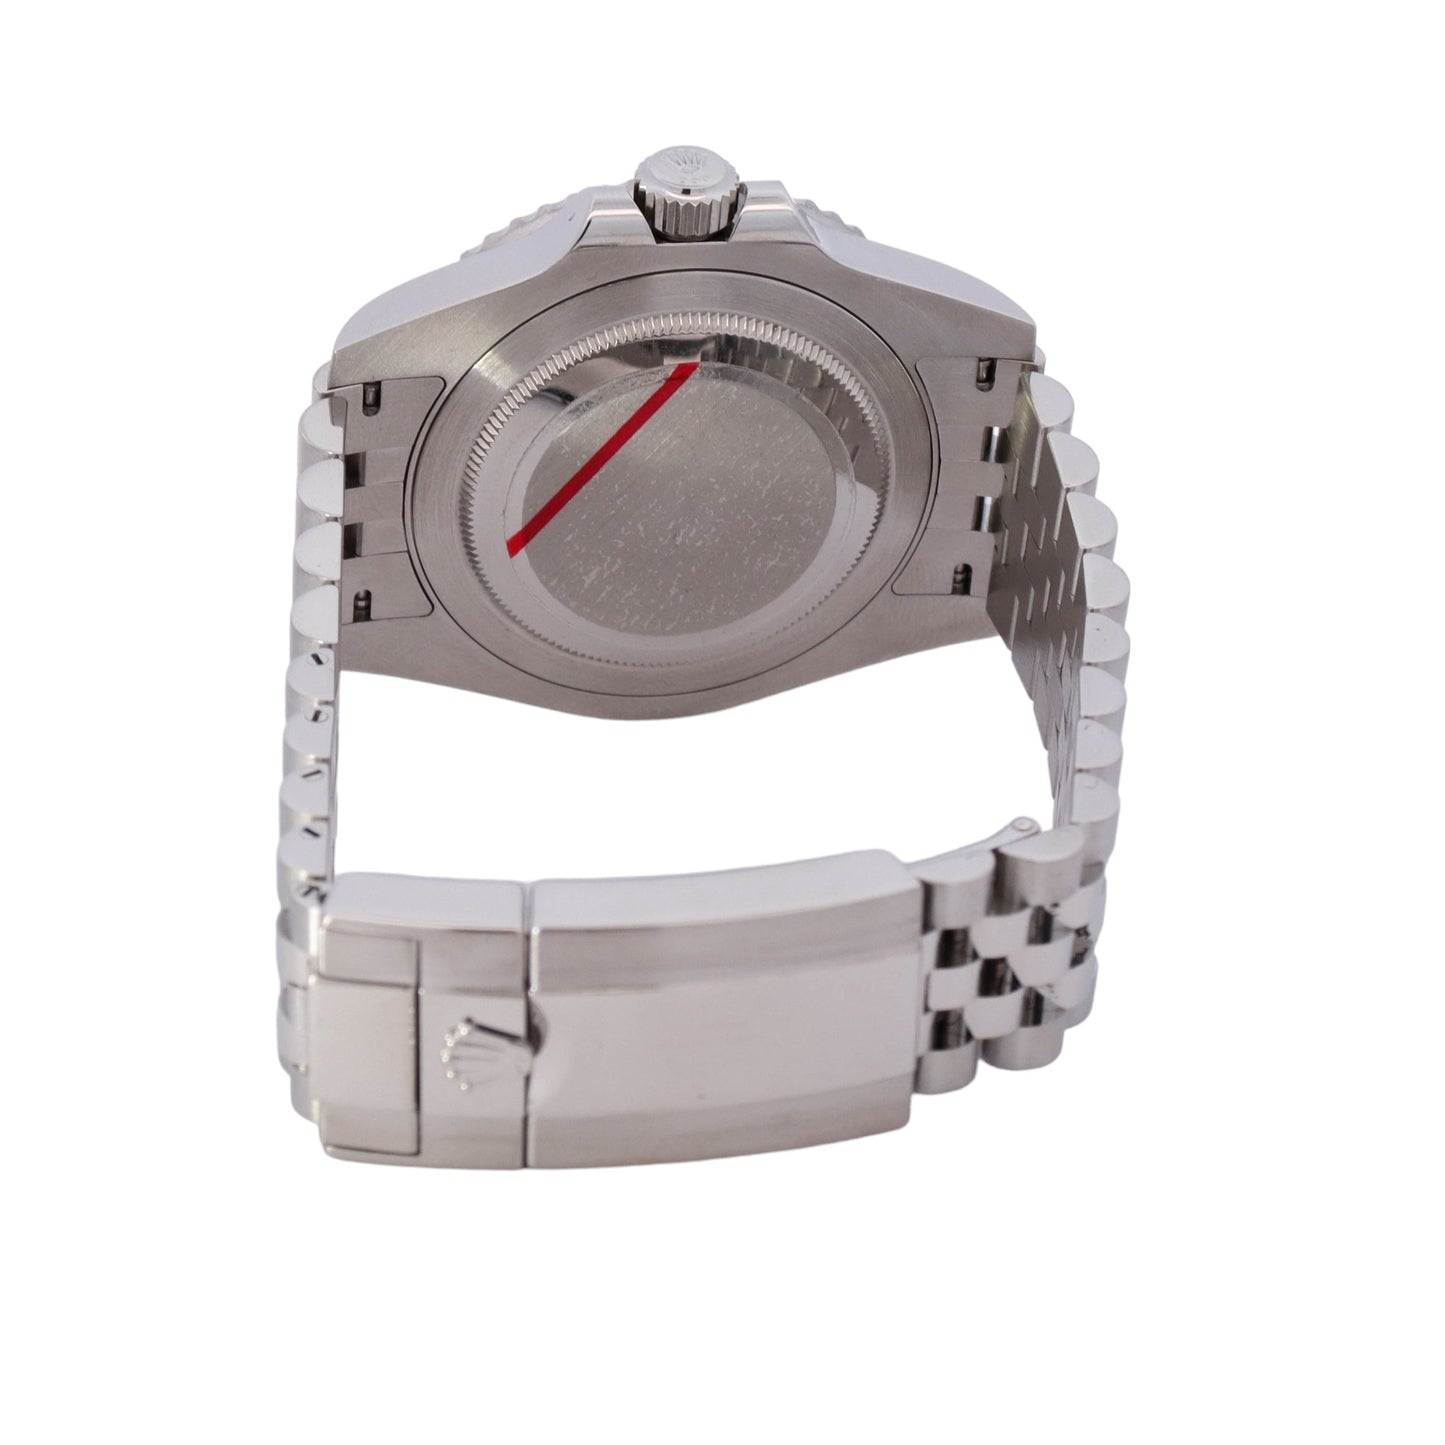 Rolex GMT Master II "Pepsi" 40mm Stainless Steel Black Dot Dial Watch Reference #: 126710BLRO - Happy Jewelers Fine Jewelry Lifetime Warranty